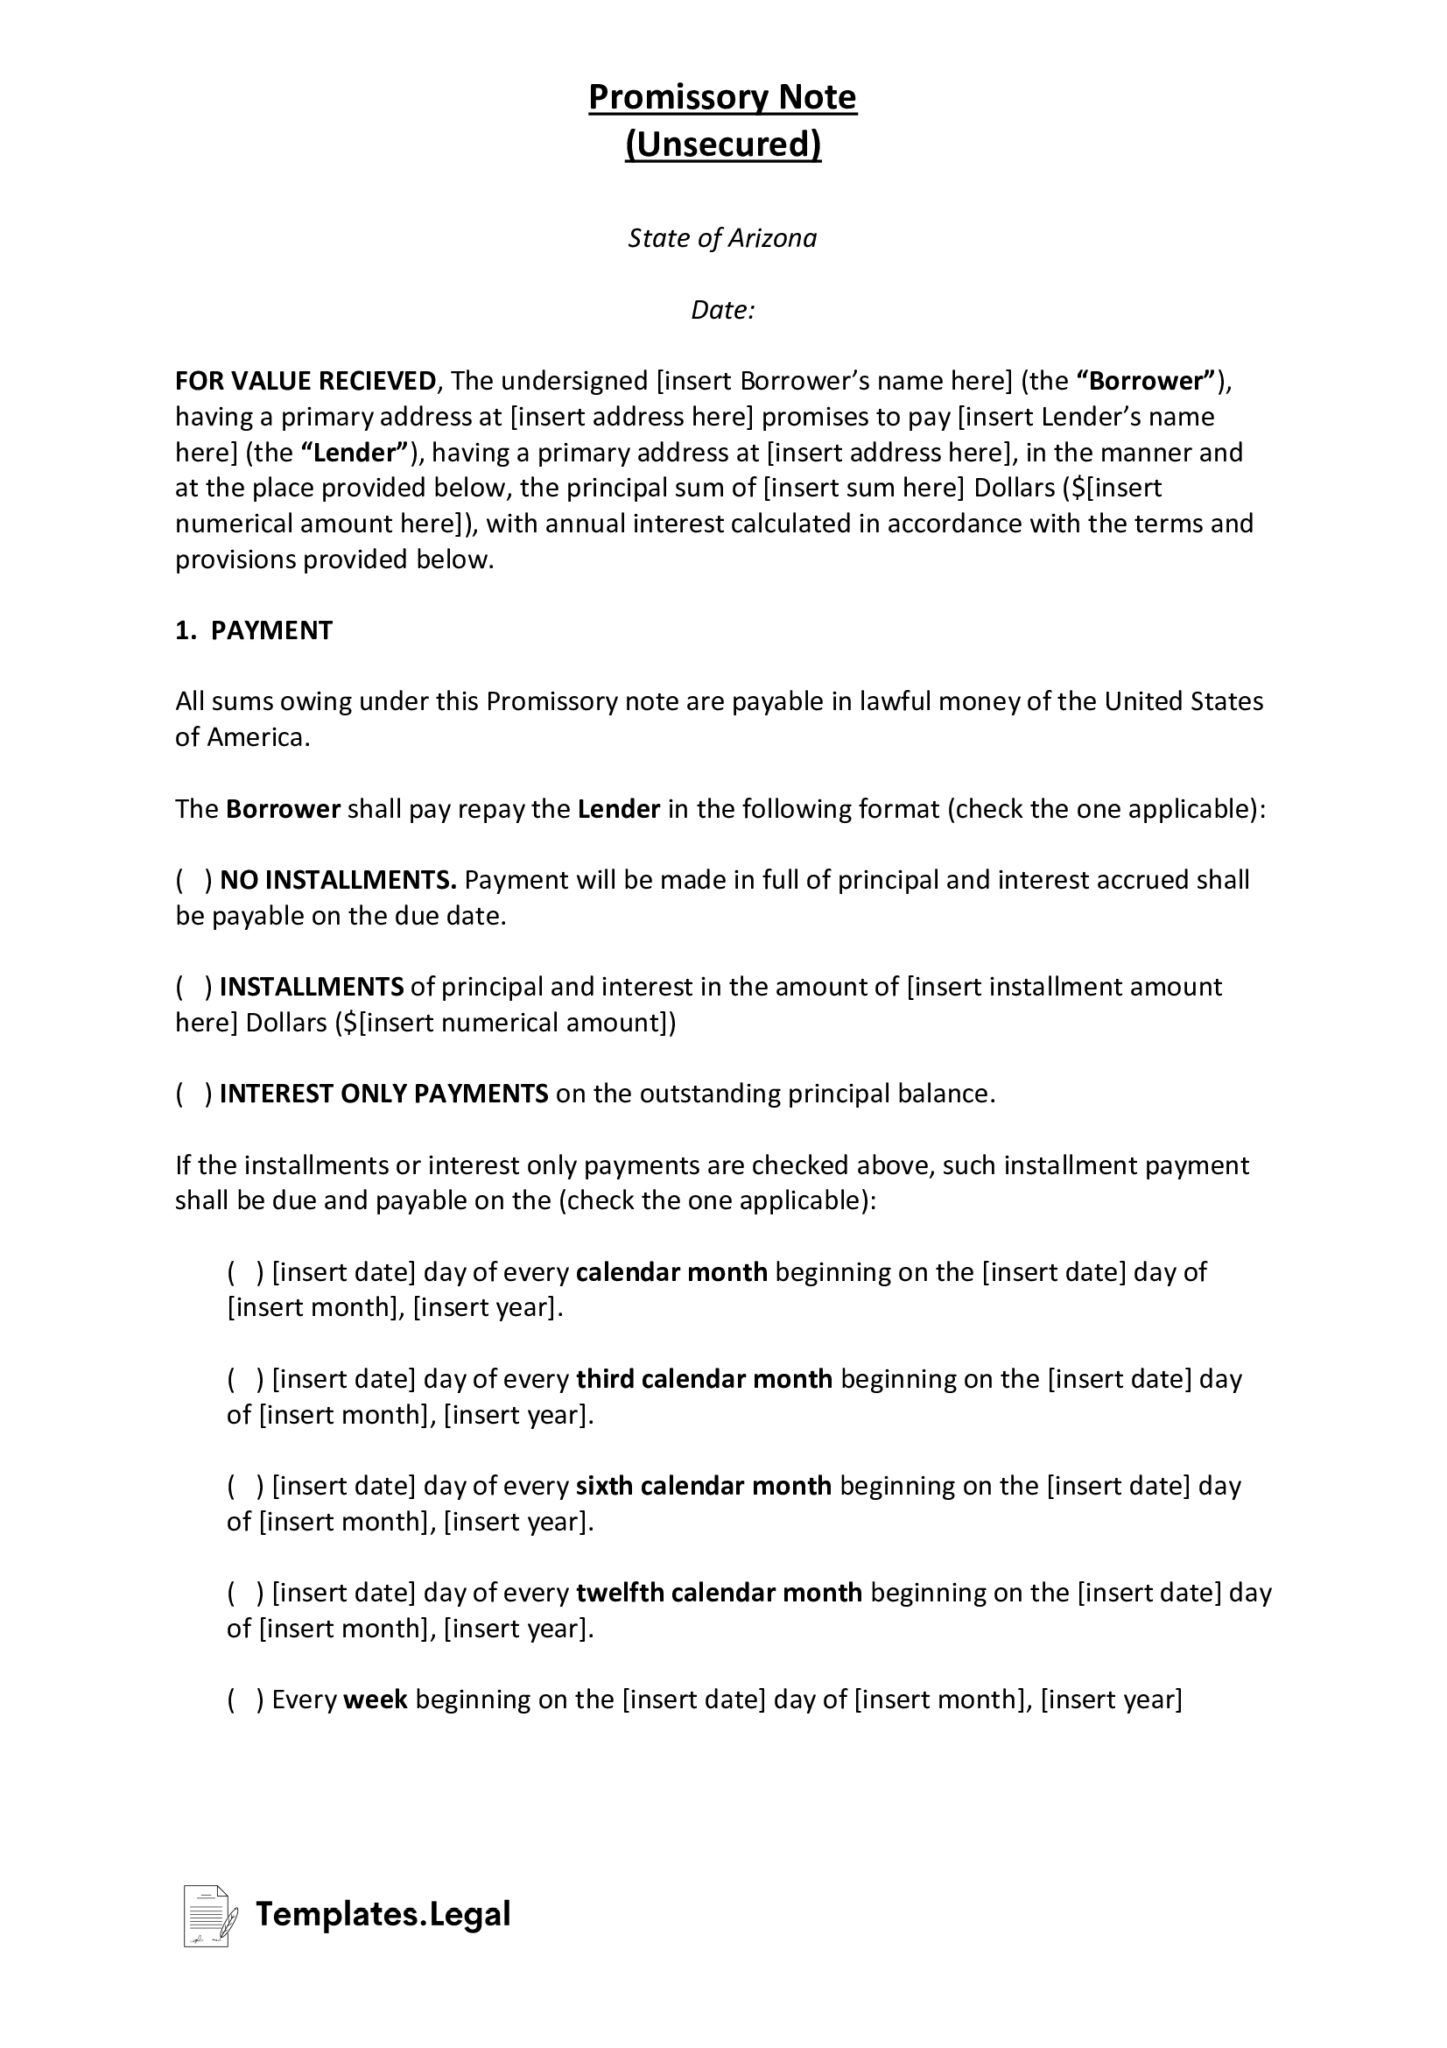 Arizona Promissory Note Templates (Free) [Word, PDF, ODT]